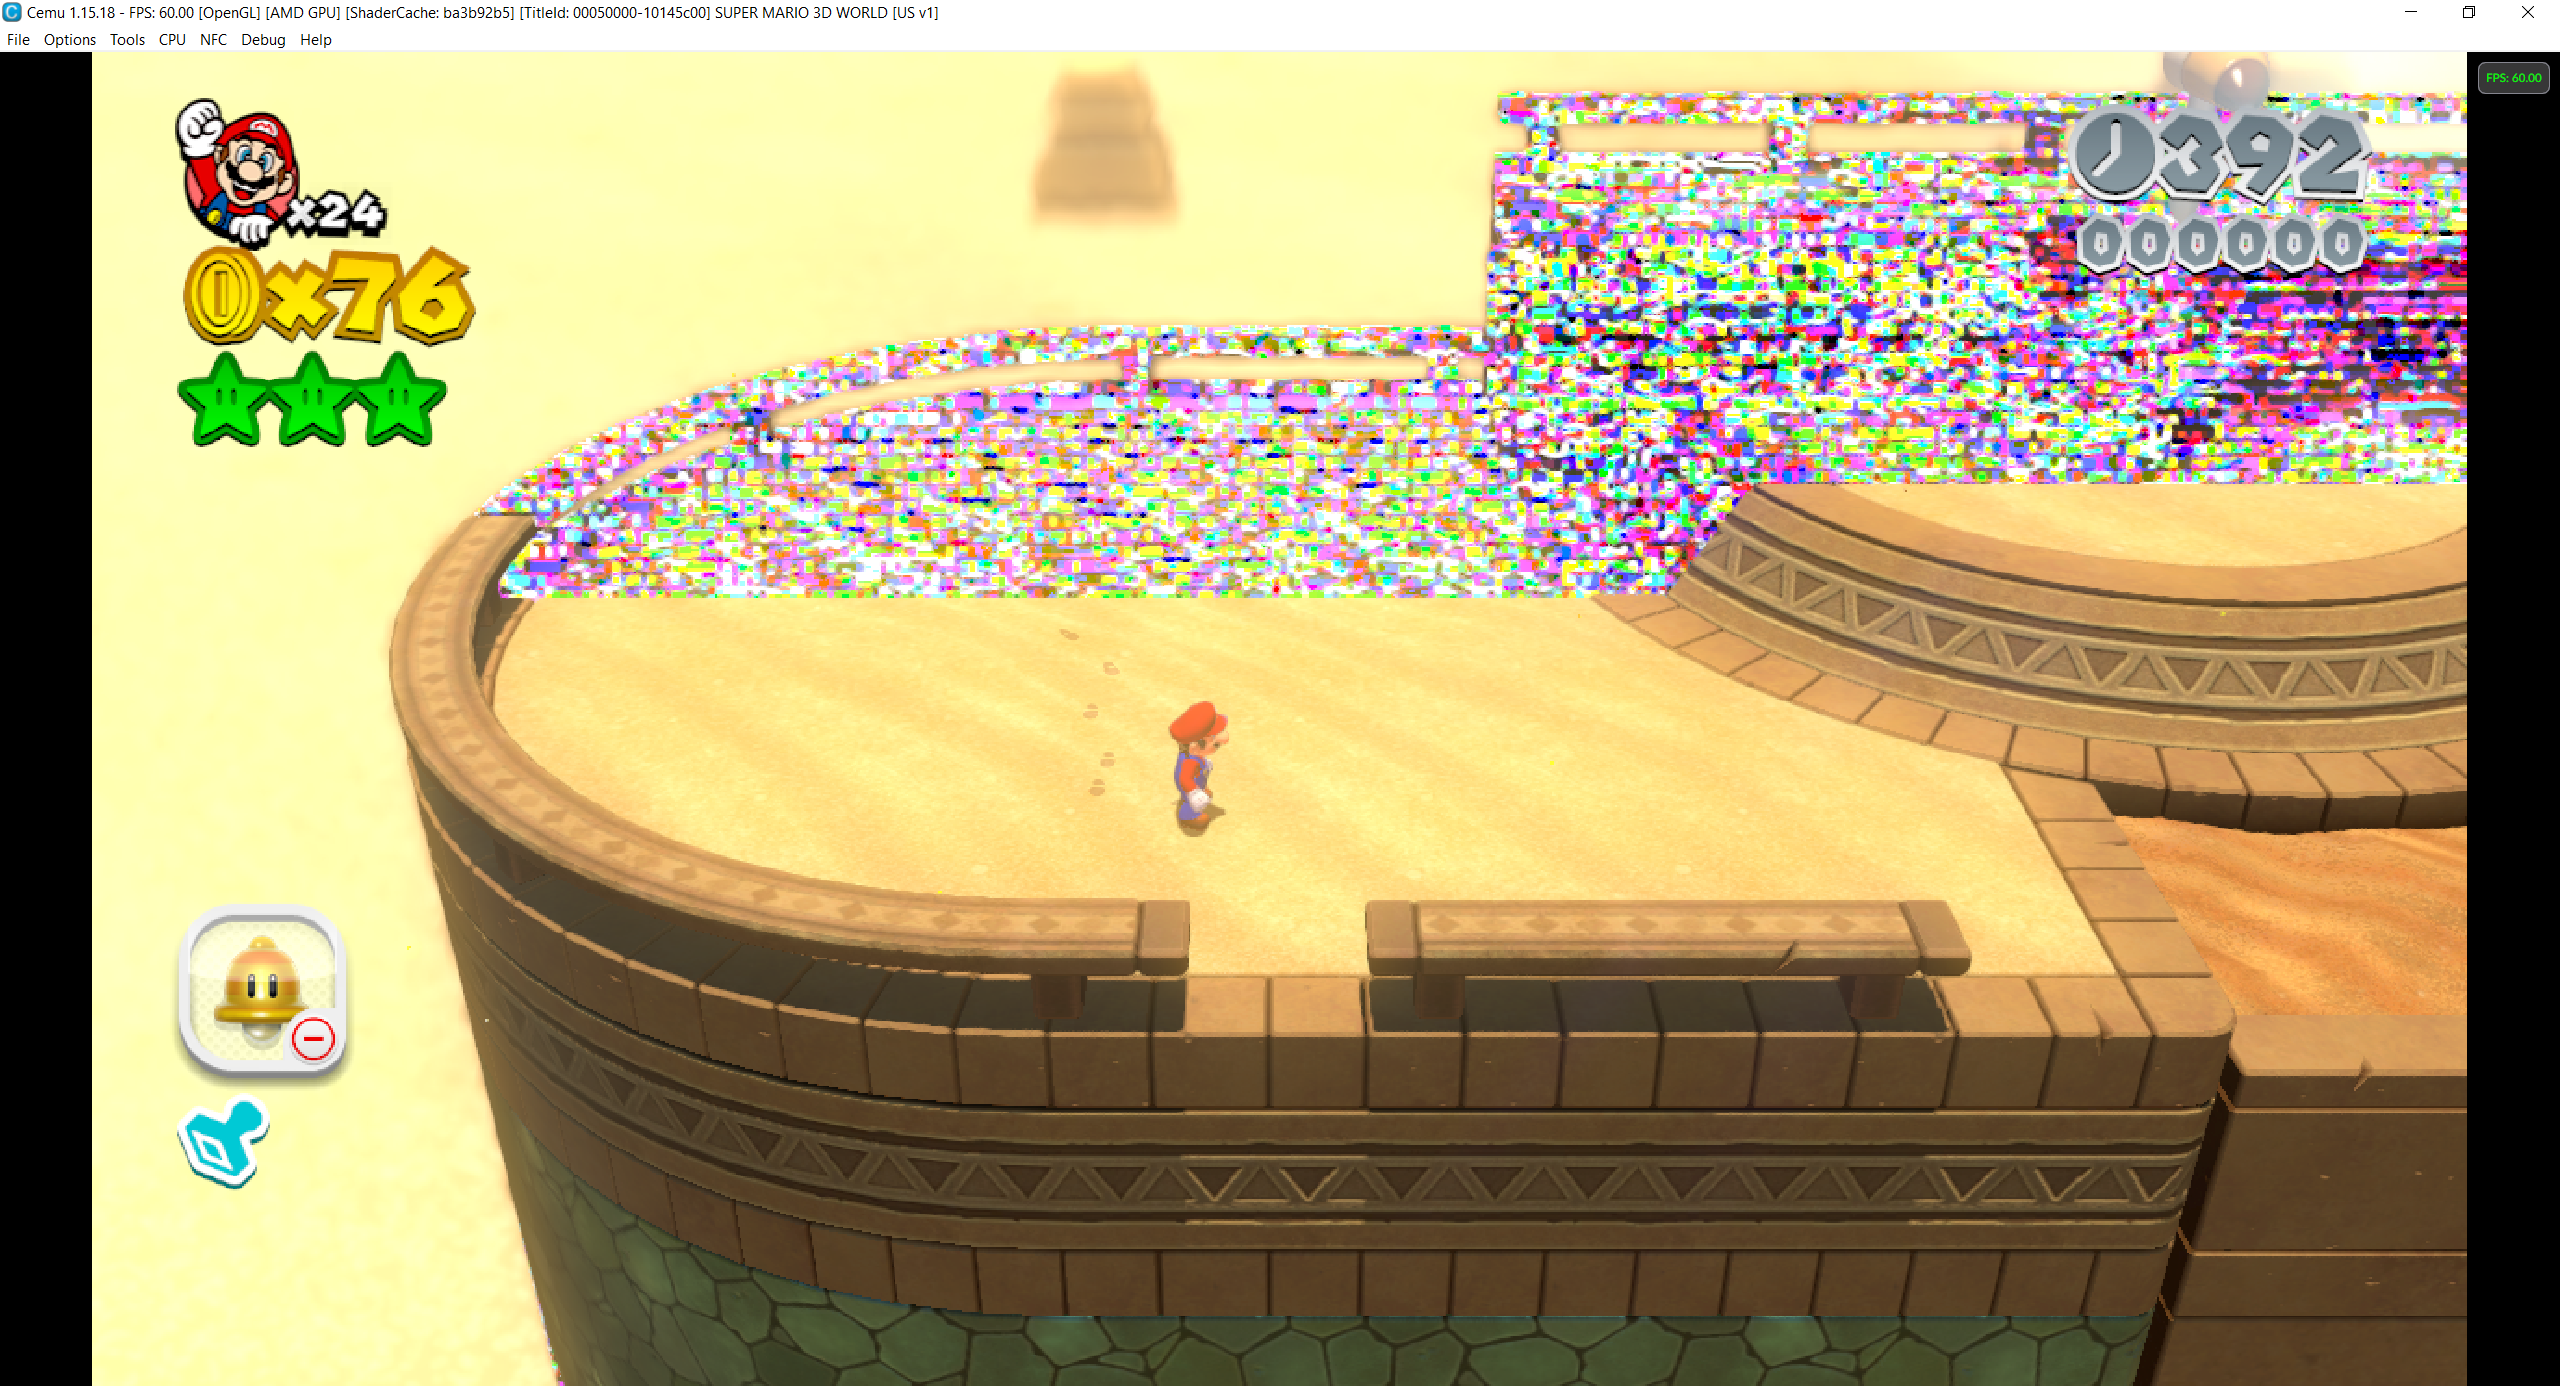 Mario Background 3D